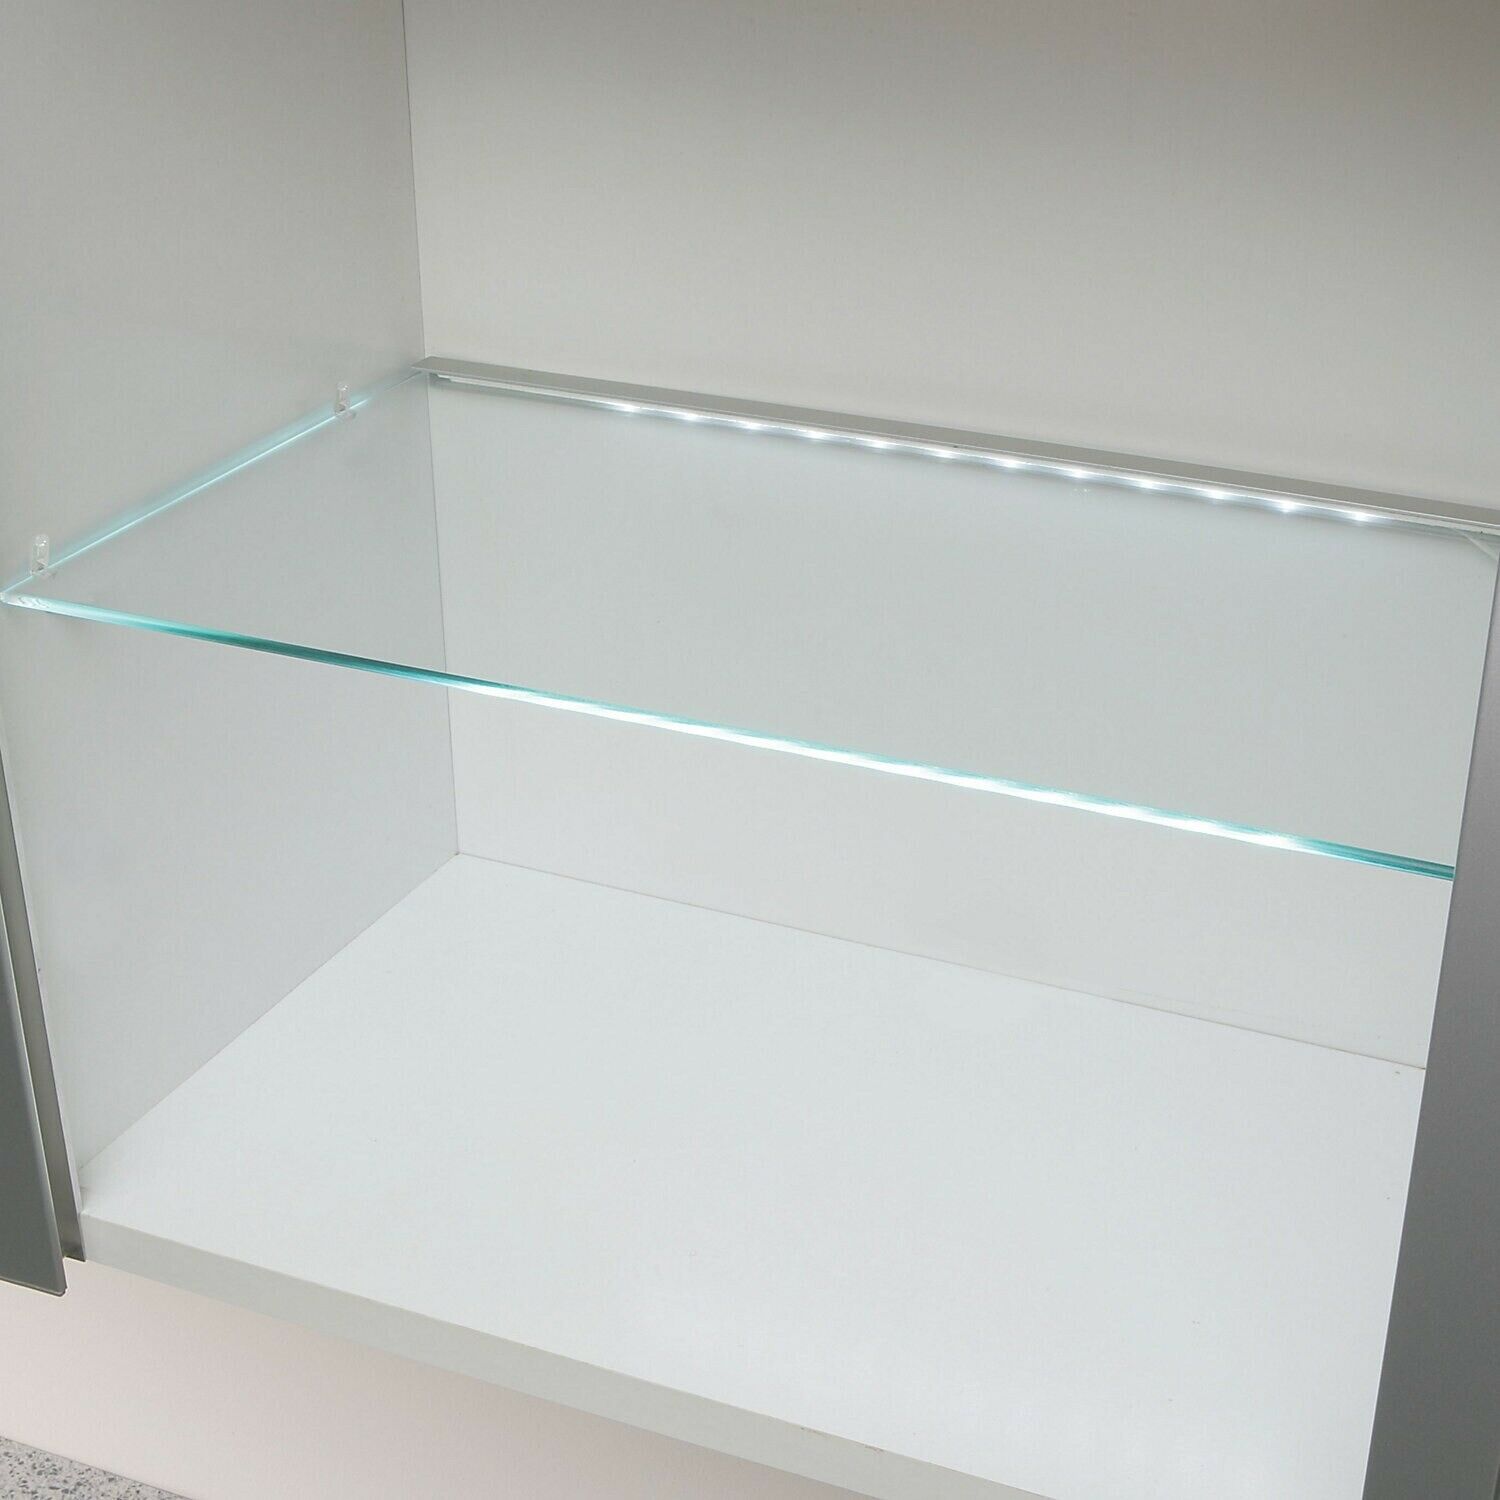 Clear Glass cupboard shelf (L)463mm (D)247mm-1336-No